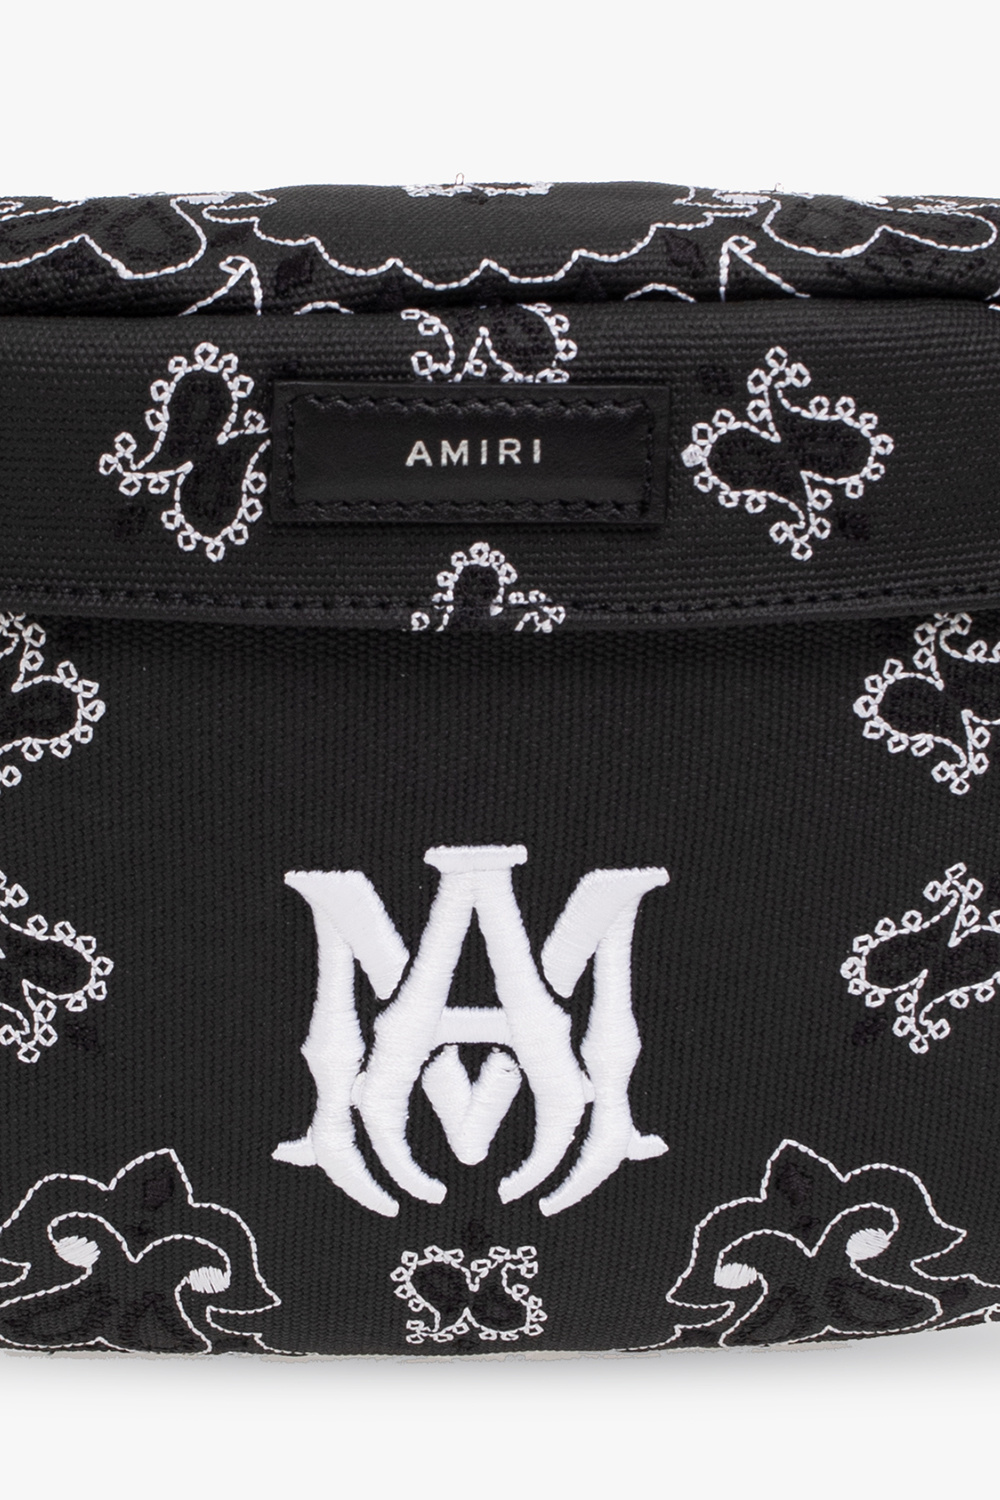 Amiri Belt Rucksack bag with logo